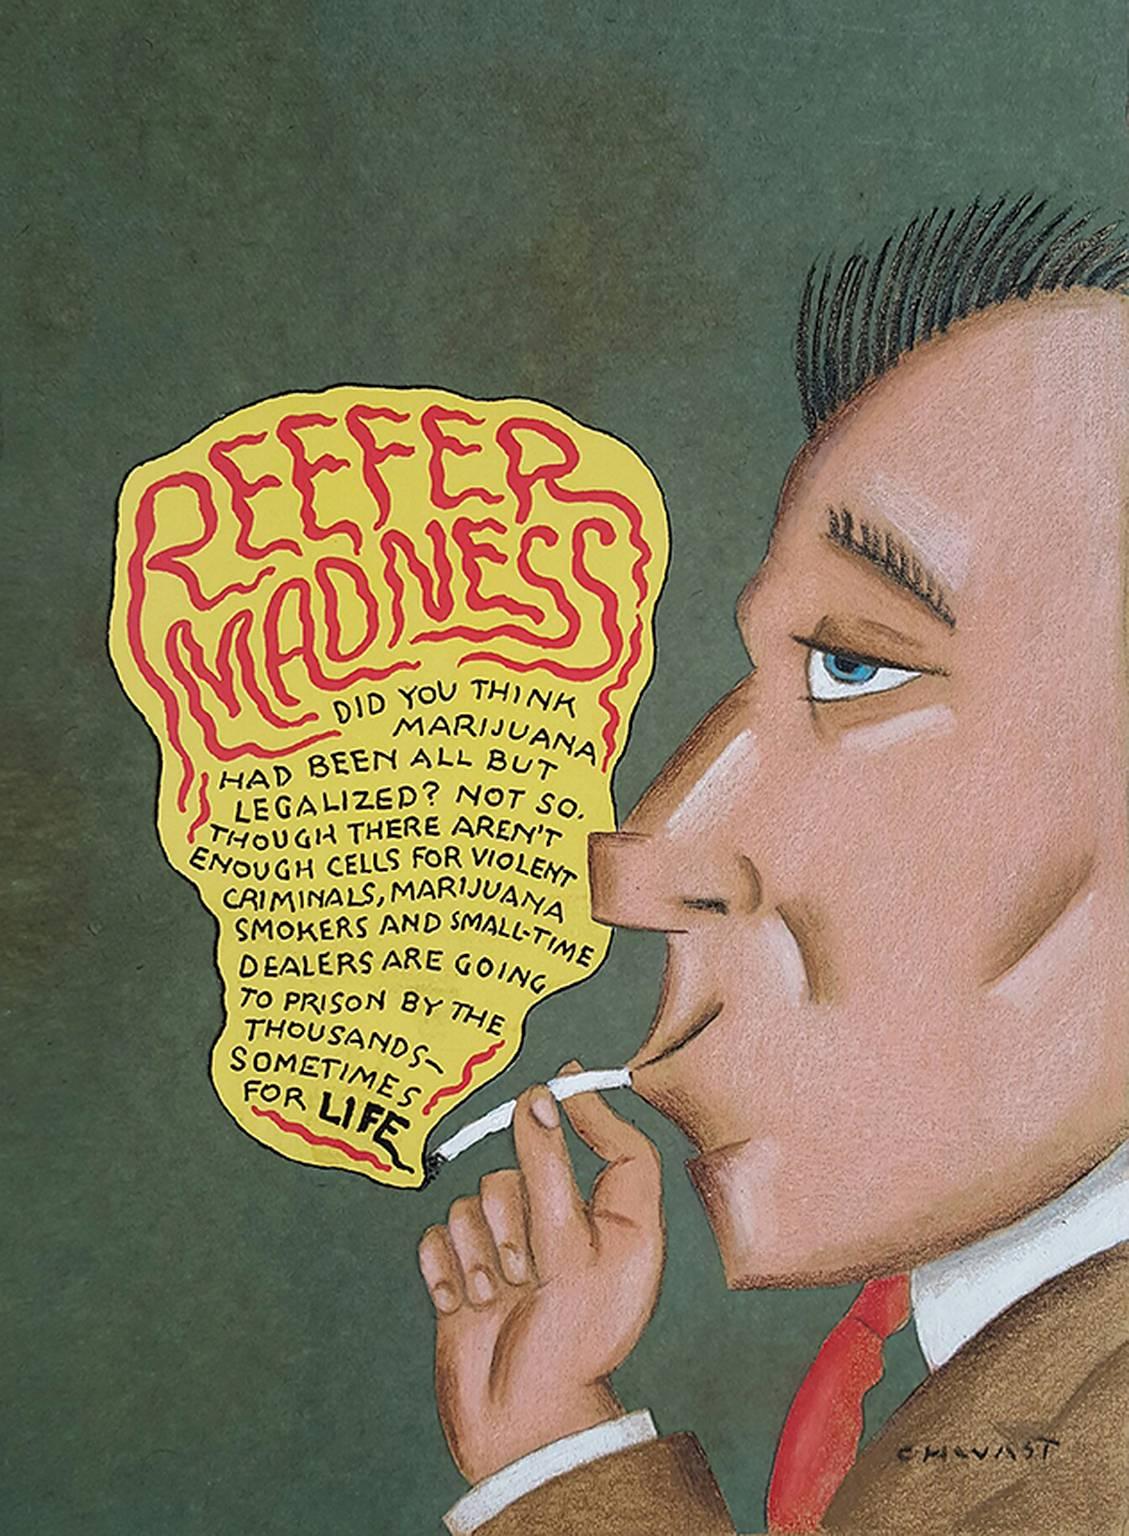 Reefer Madness, Marajuana  - Topf  - Cannabis - Titelseite Atlantic Monthly Magazine – Mixed Media Art von Seymour Chwast